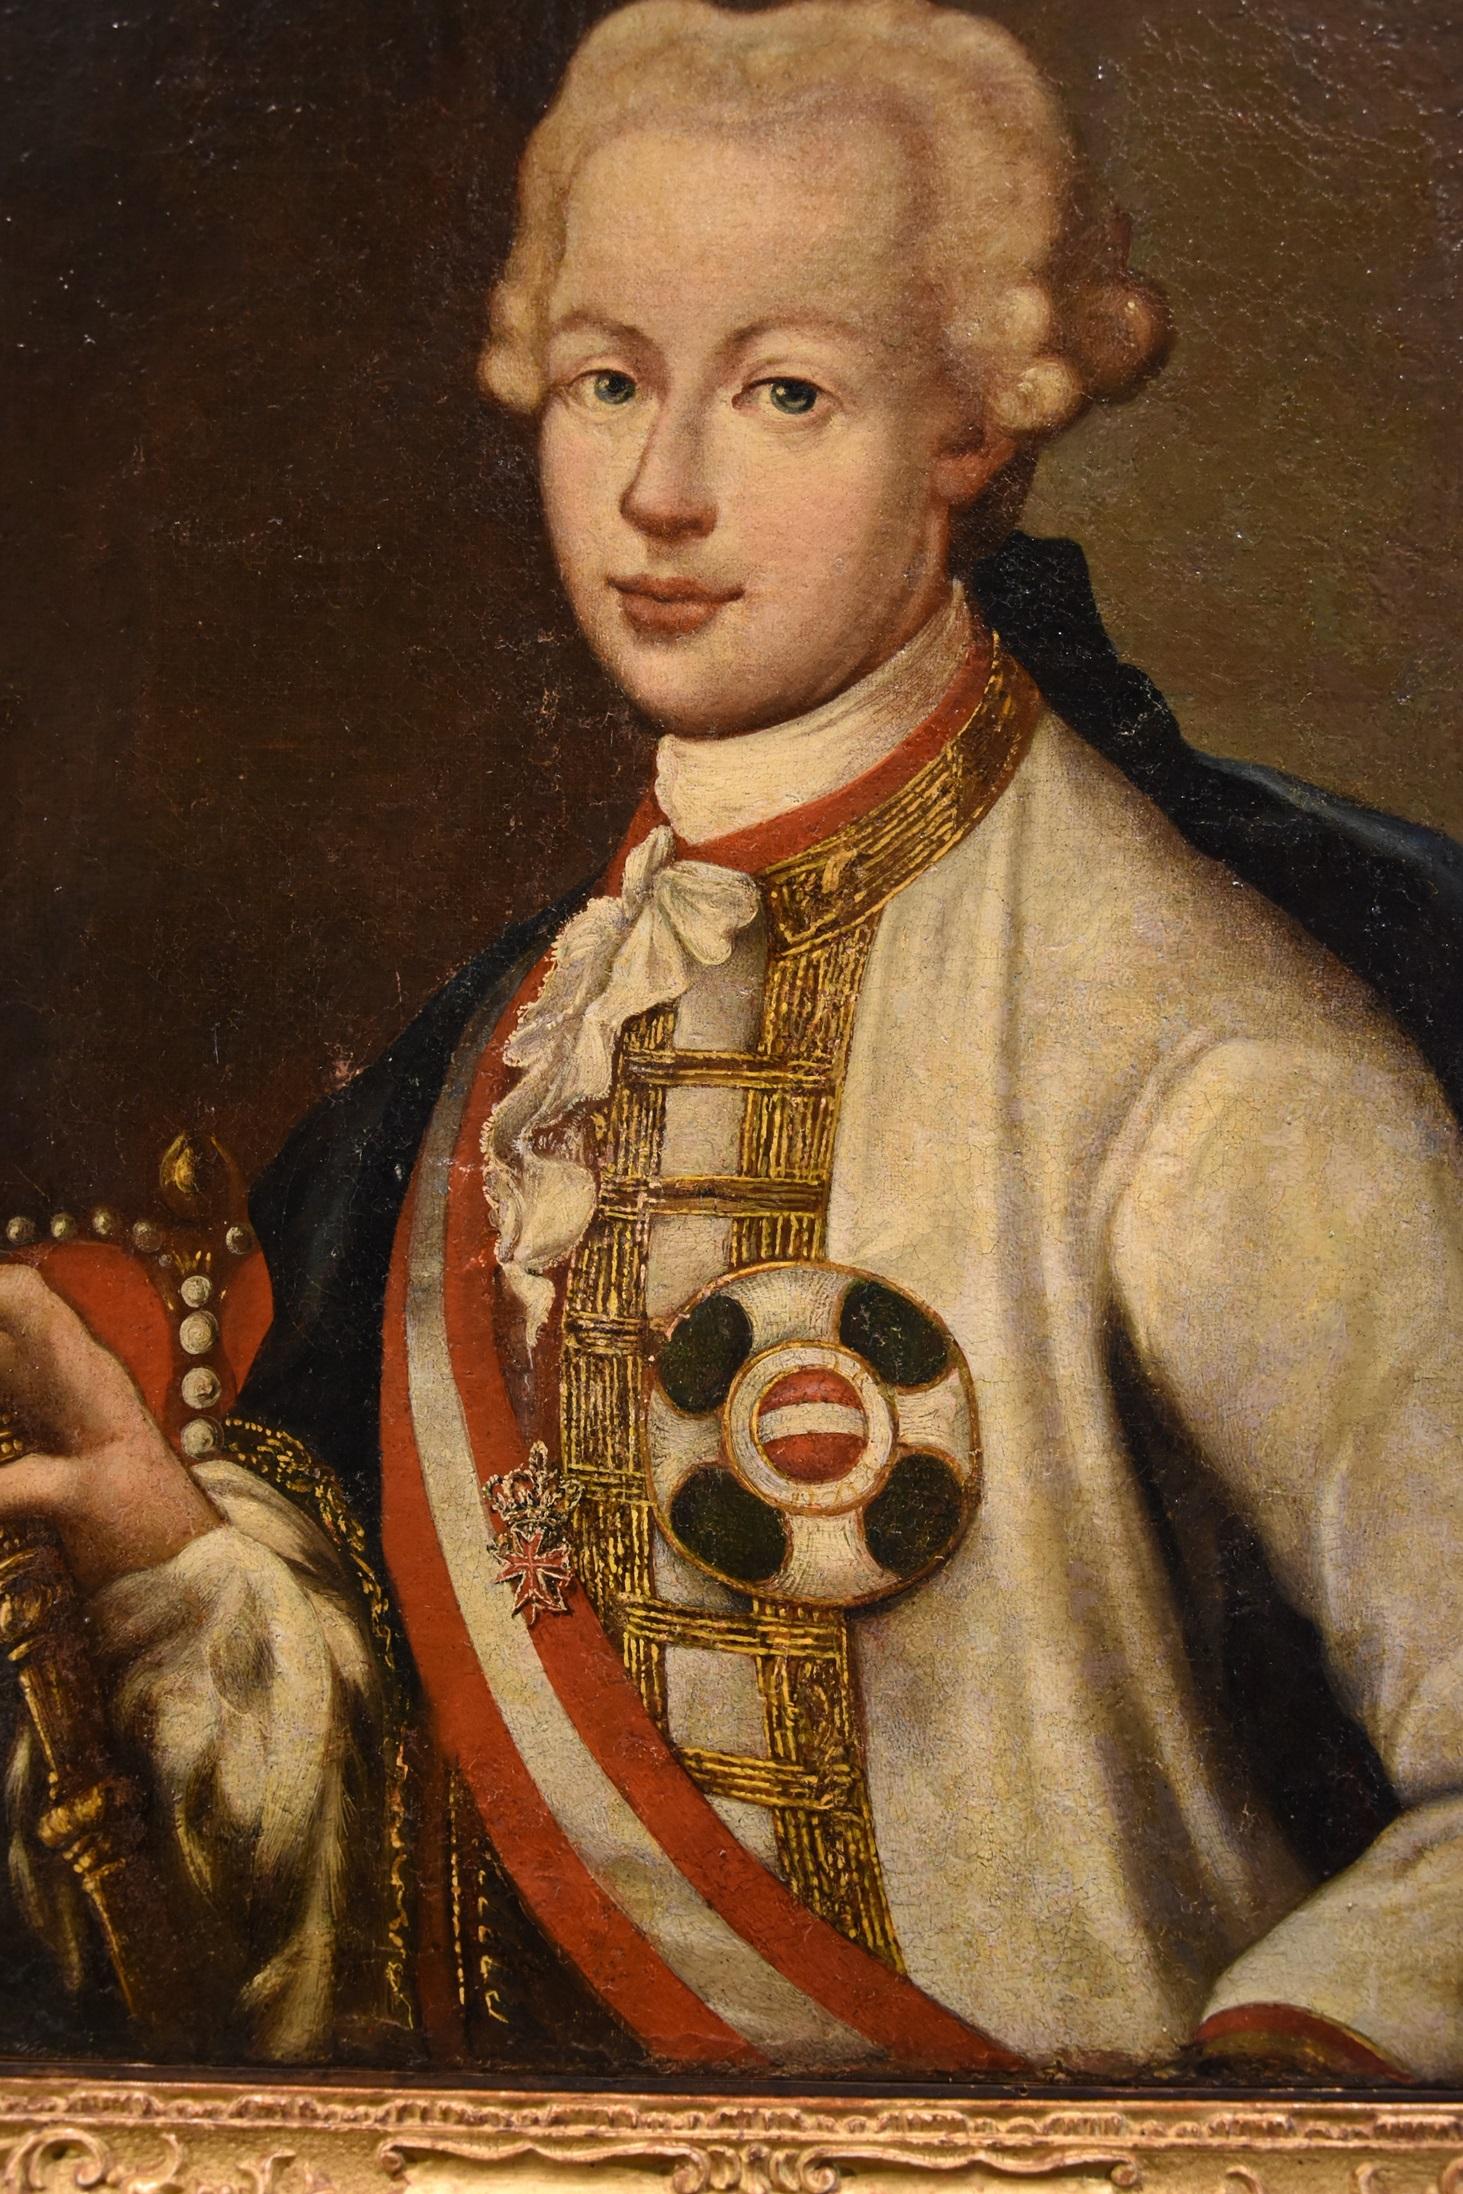 Portrait Emperor Peter Van Meytens Paint Oil on canvas 18th Century Flemish Art 3